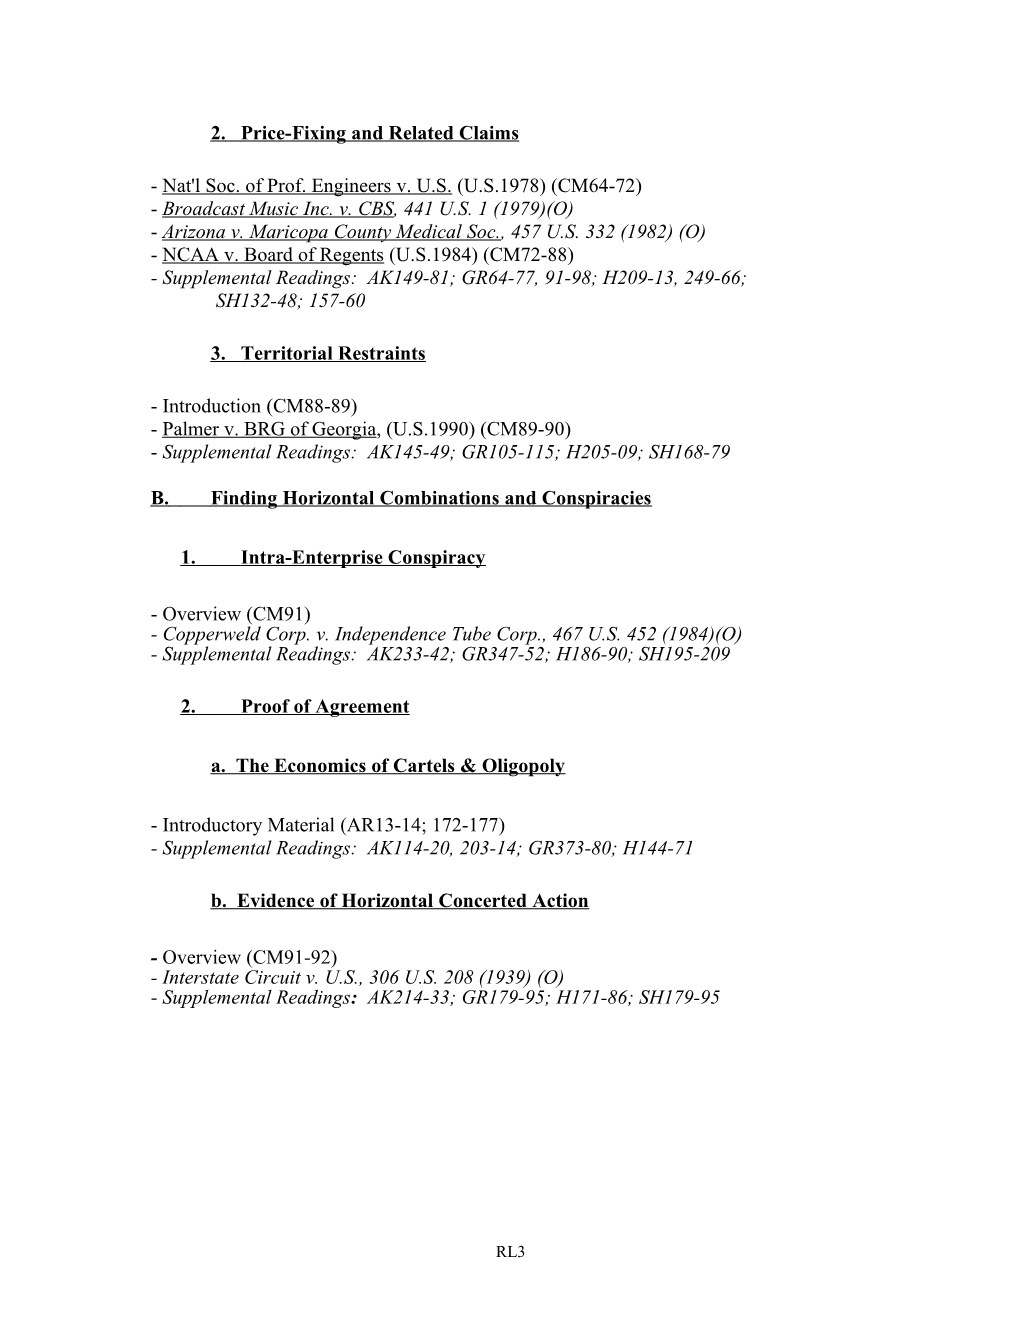 Complete Antitrust Fall 2004 Reading List